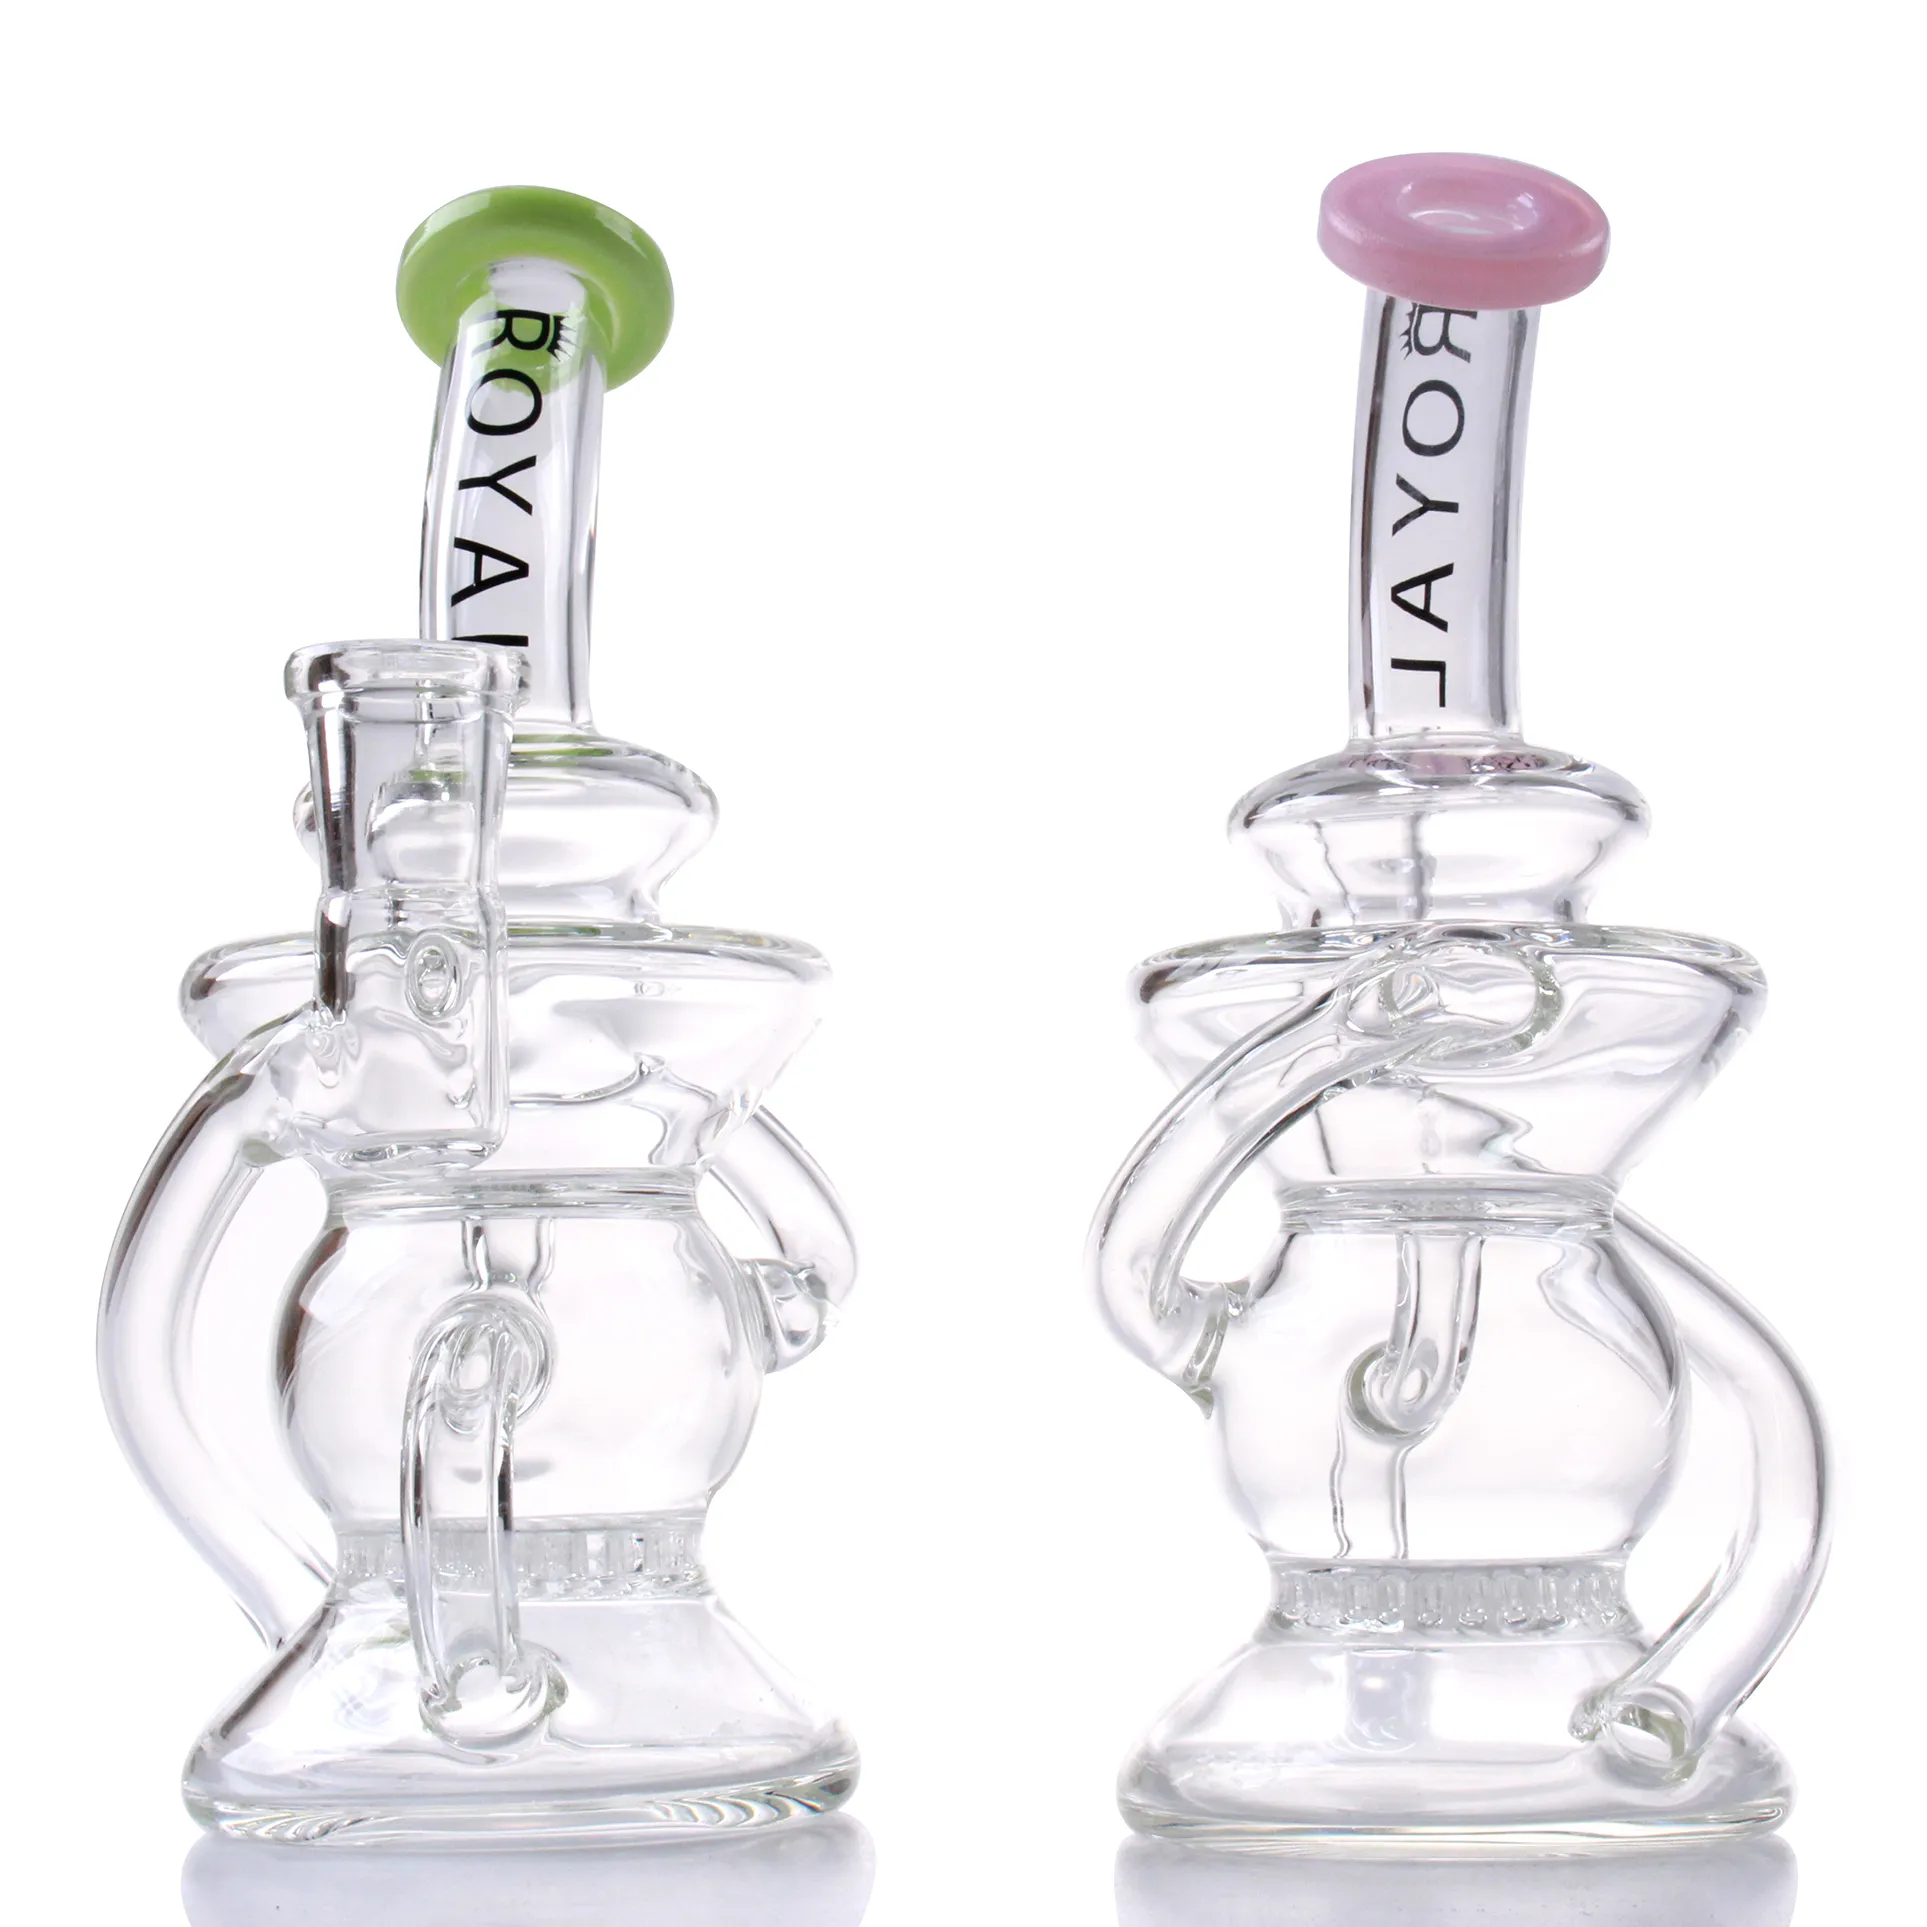 Royal Glass Cookahs Water Bong с сотами PERC Цветная губа женская 14,5 мм рециркуляционные установки DAB